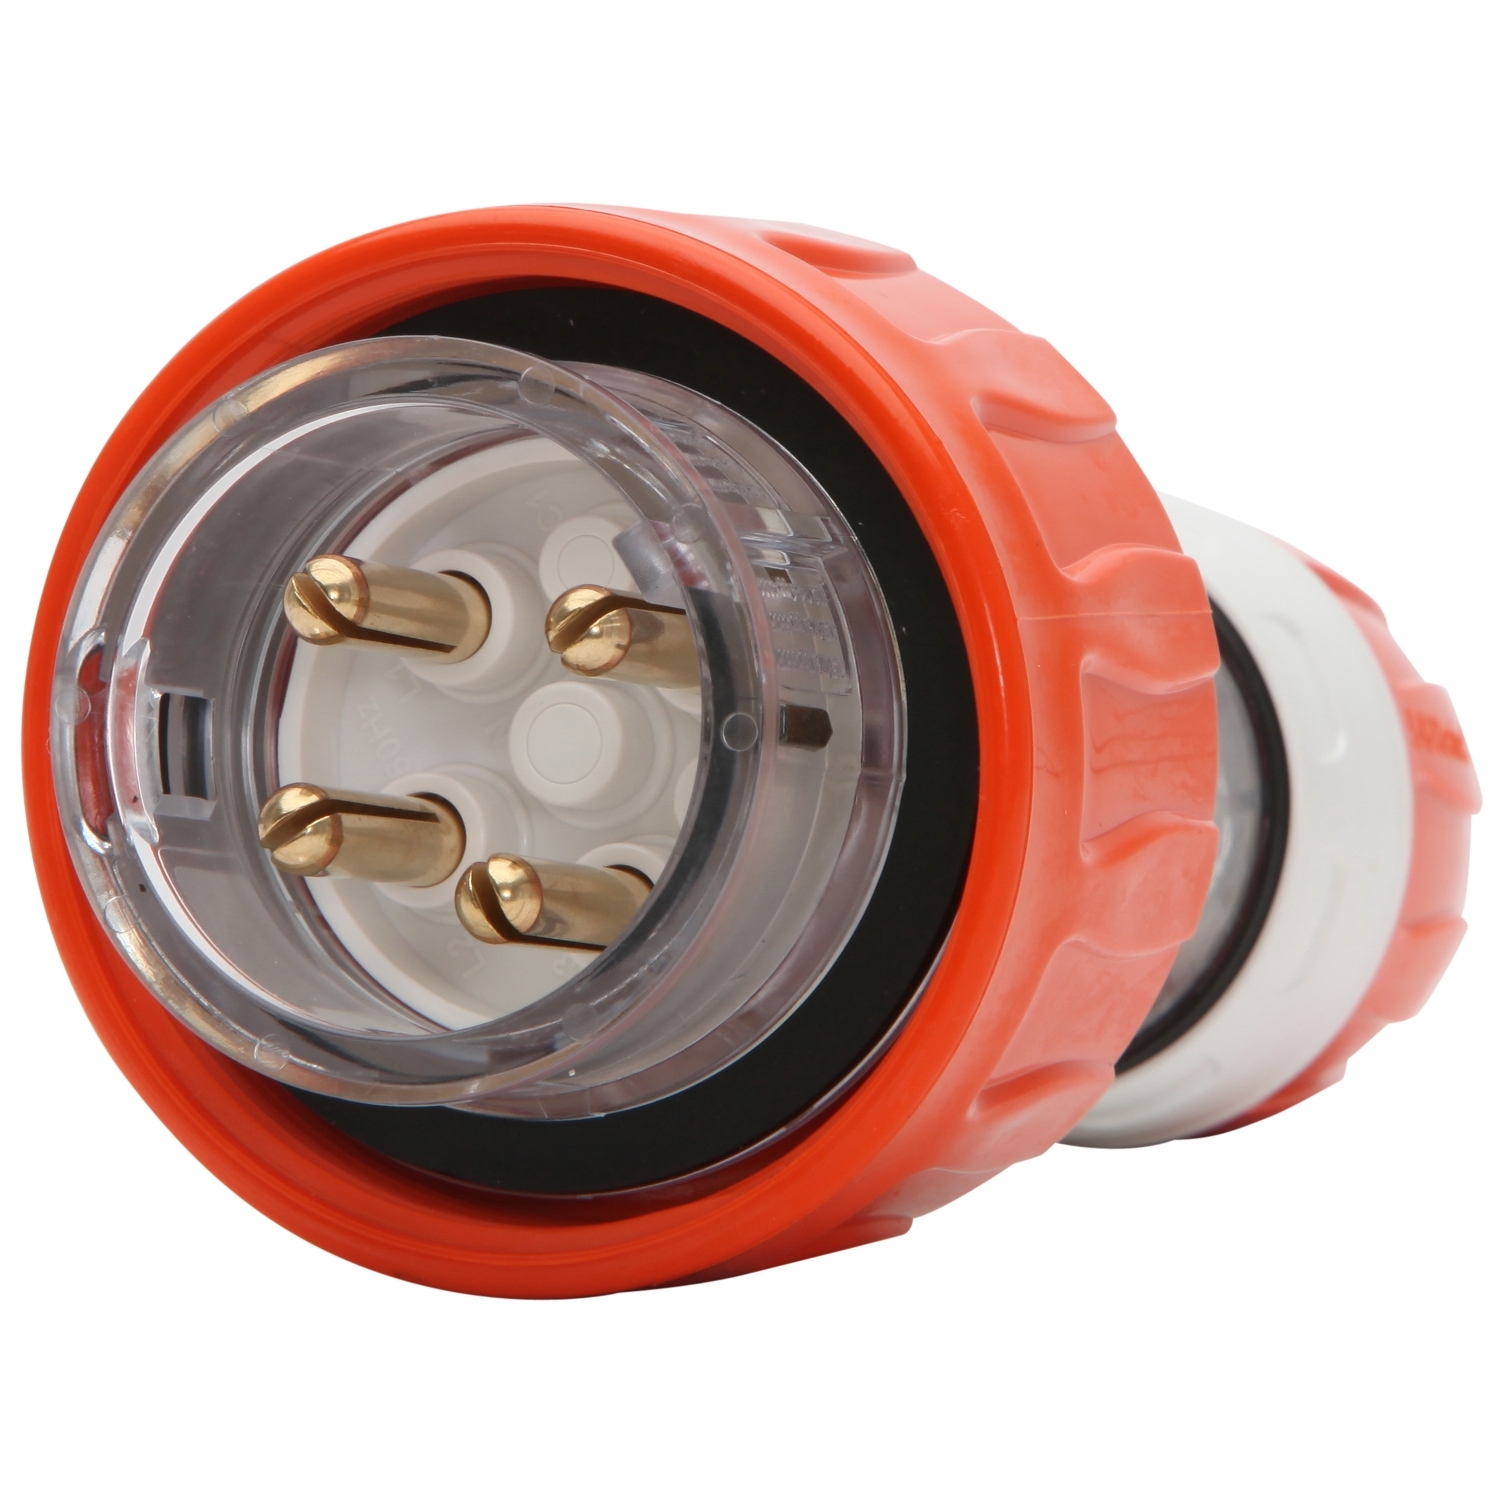 PDL 56 Series - Plug Straight 16A 500V 3-Phase 4-Round Pin IP66 - Orange